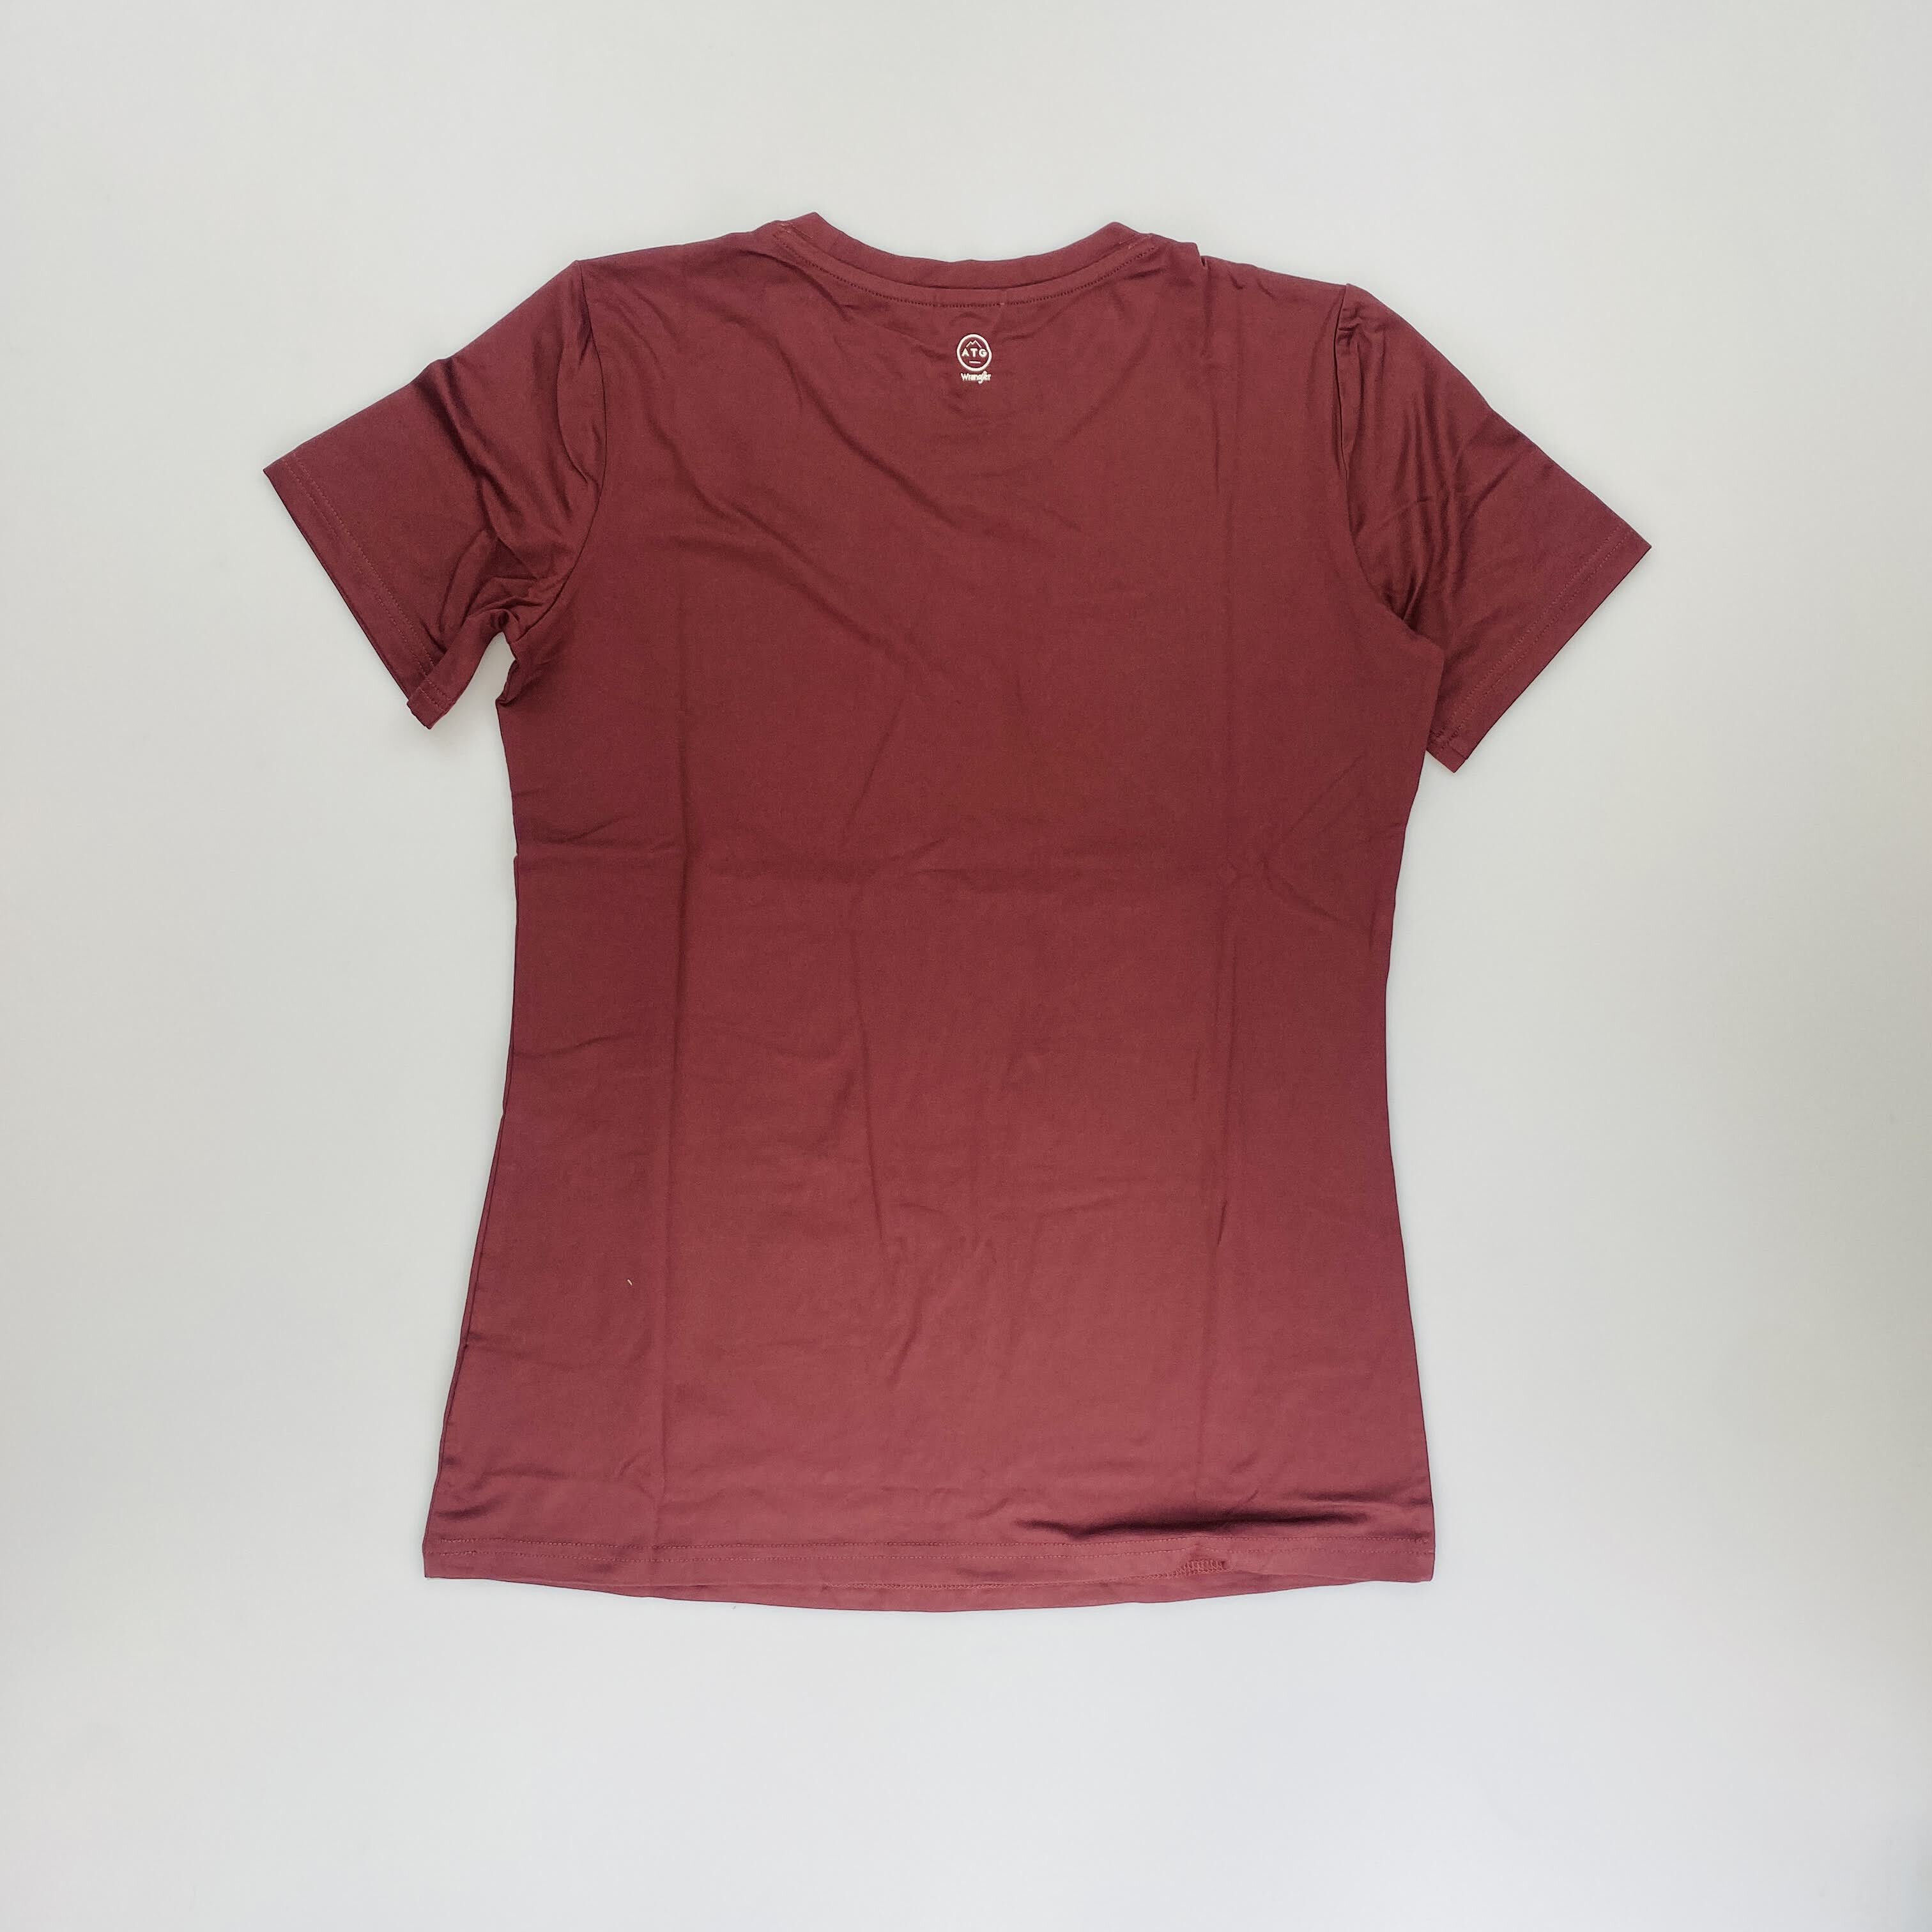 Wrangler Performance T Shirt - T-shirt di seconda mano - Donna - Rosso - L | Hardloop